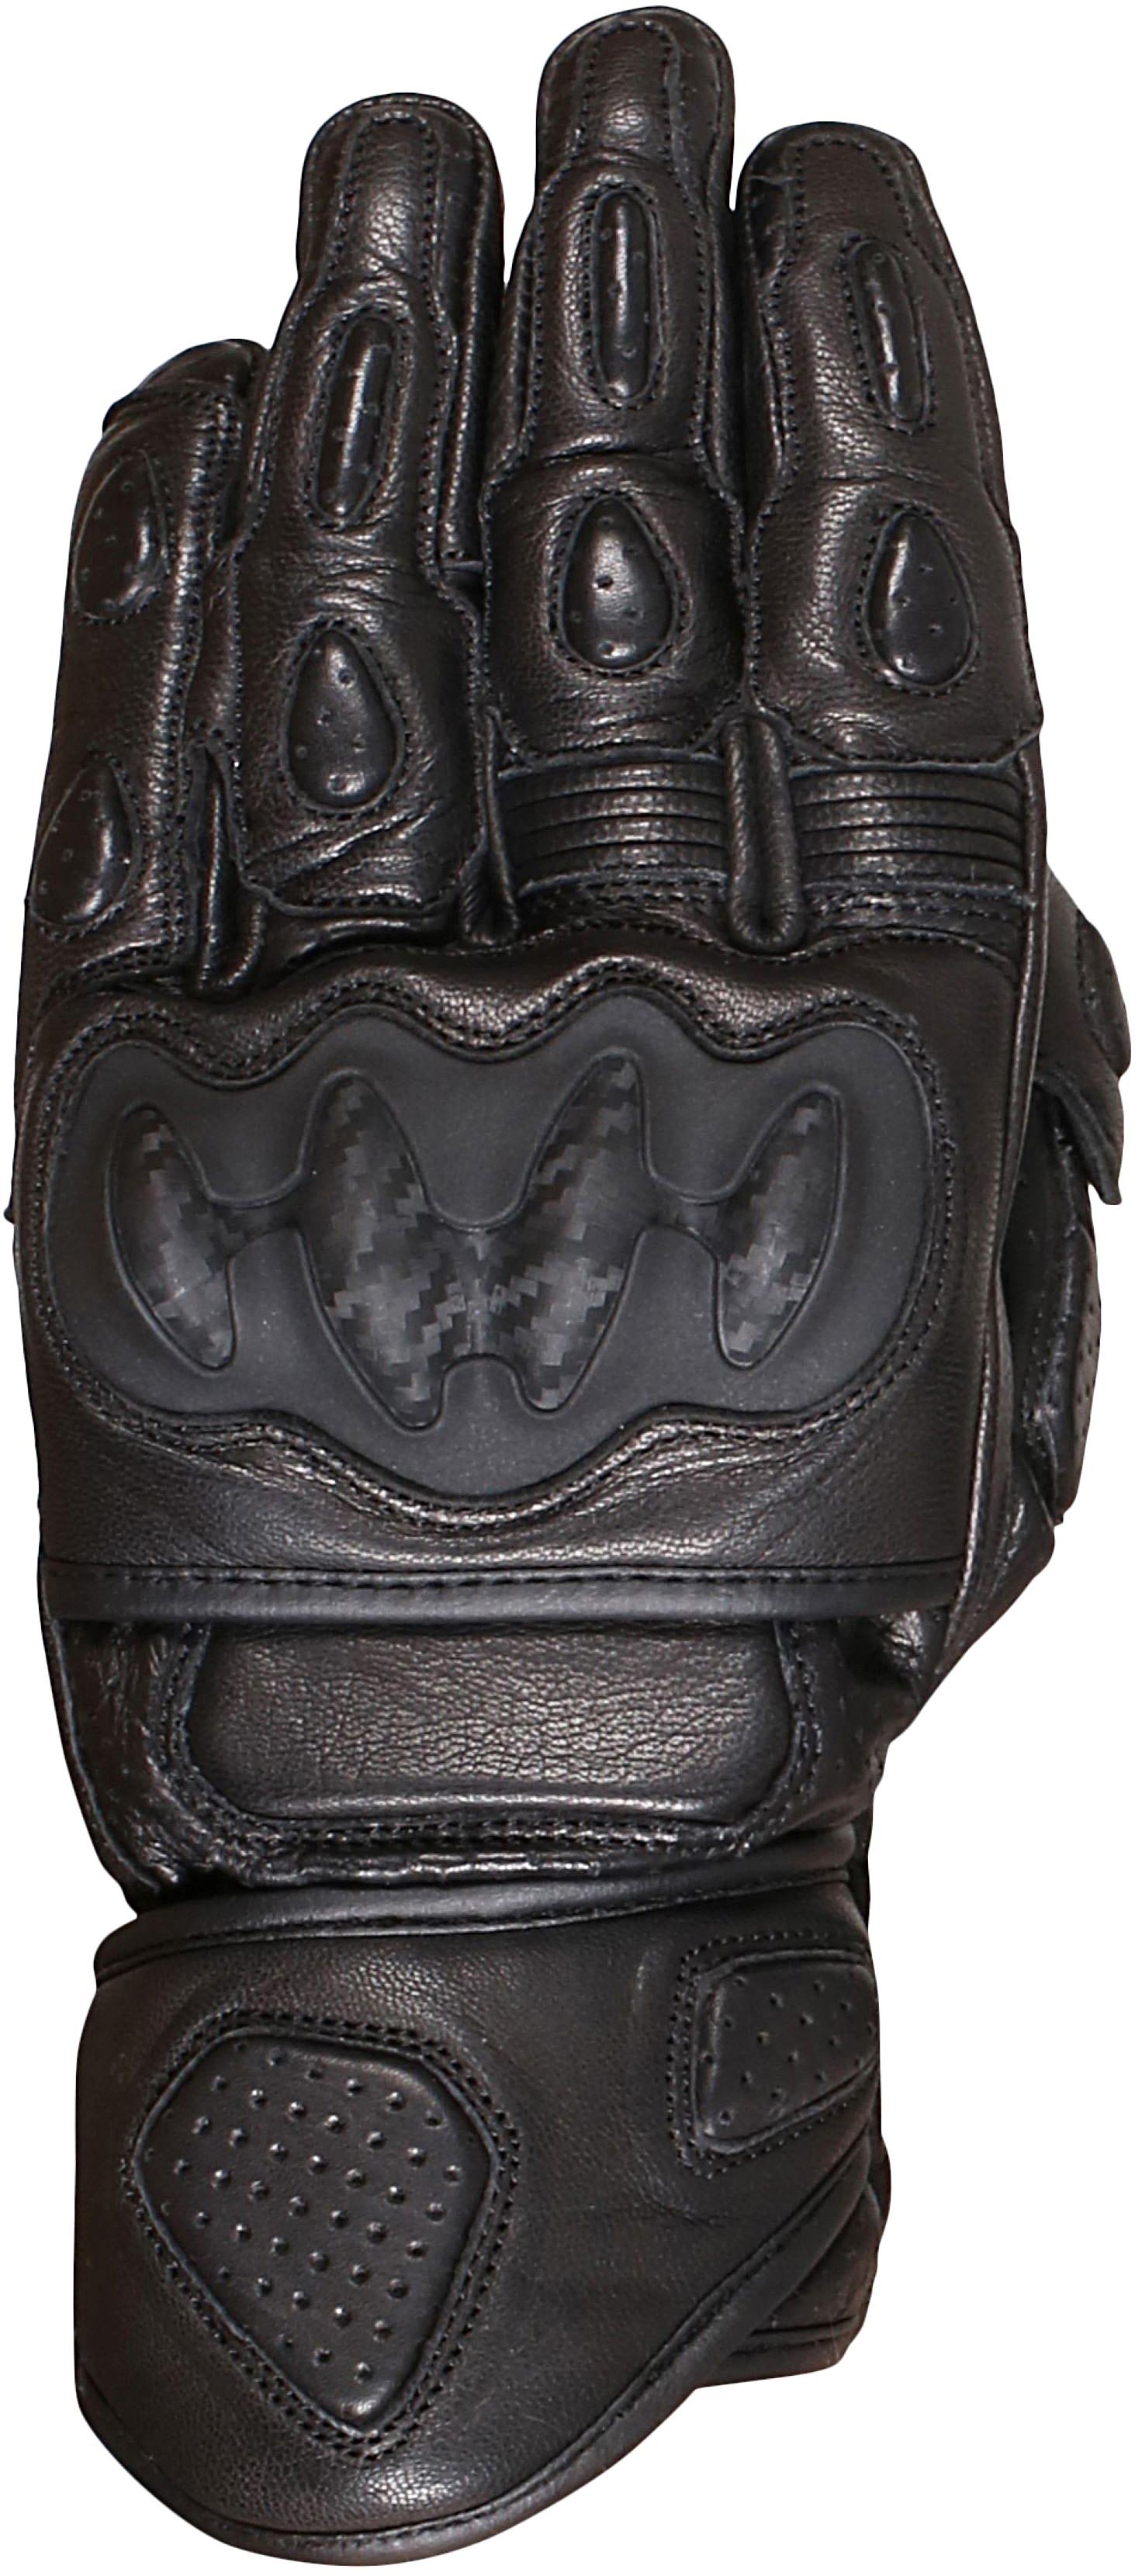 Weise Apex Motorcycle Gloves - Black, 3Xl